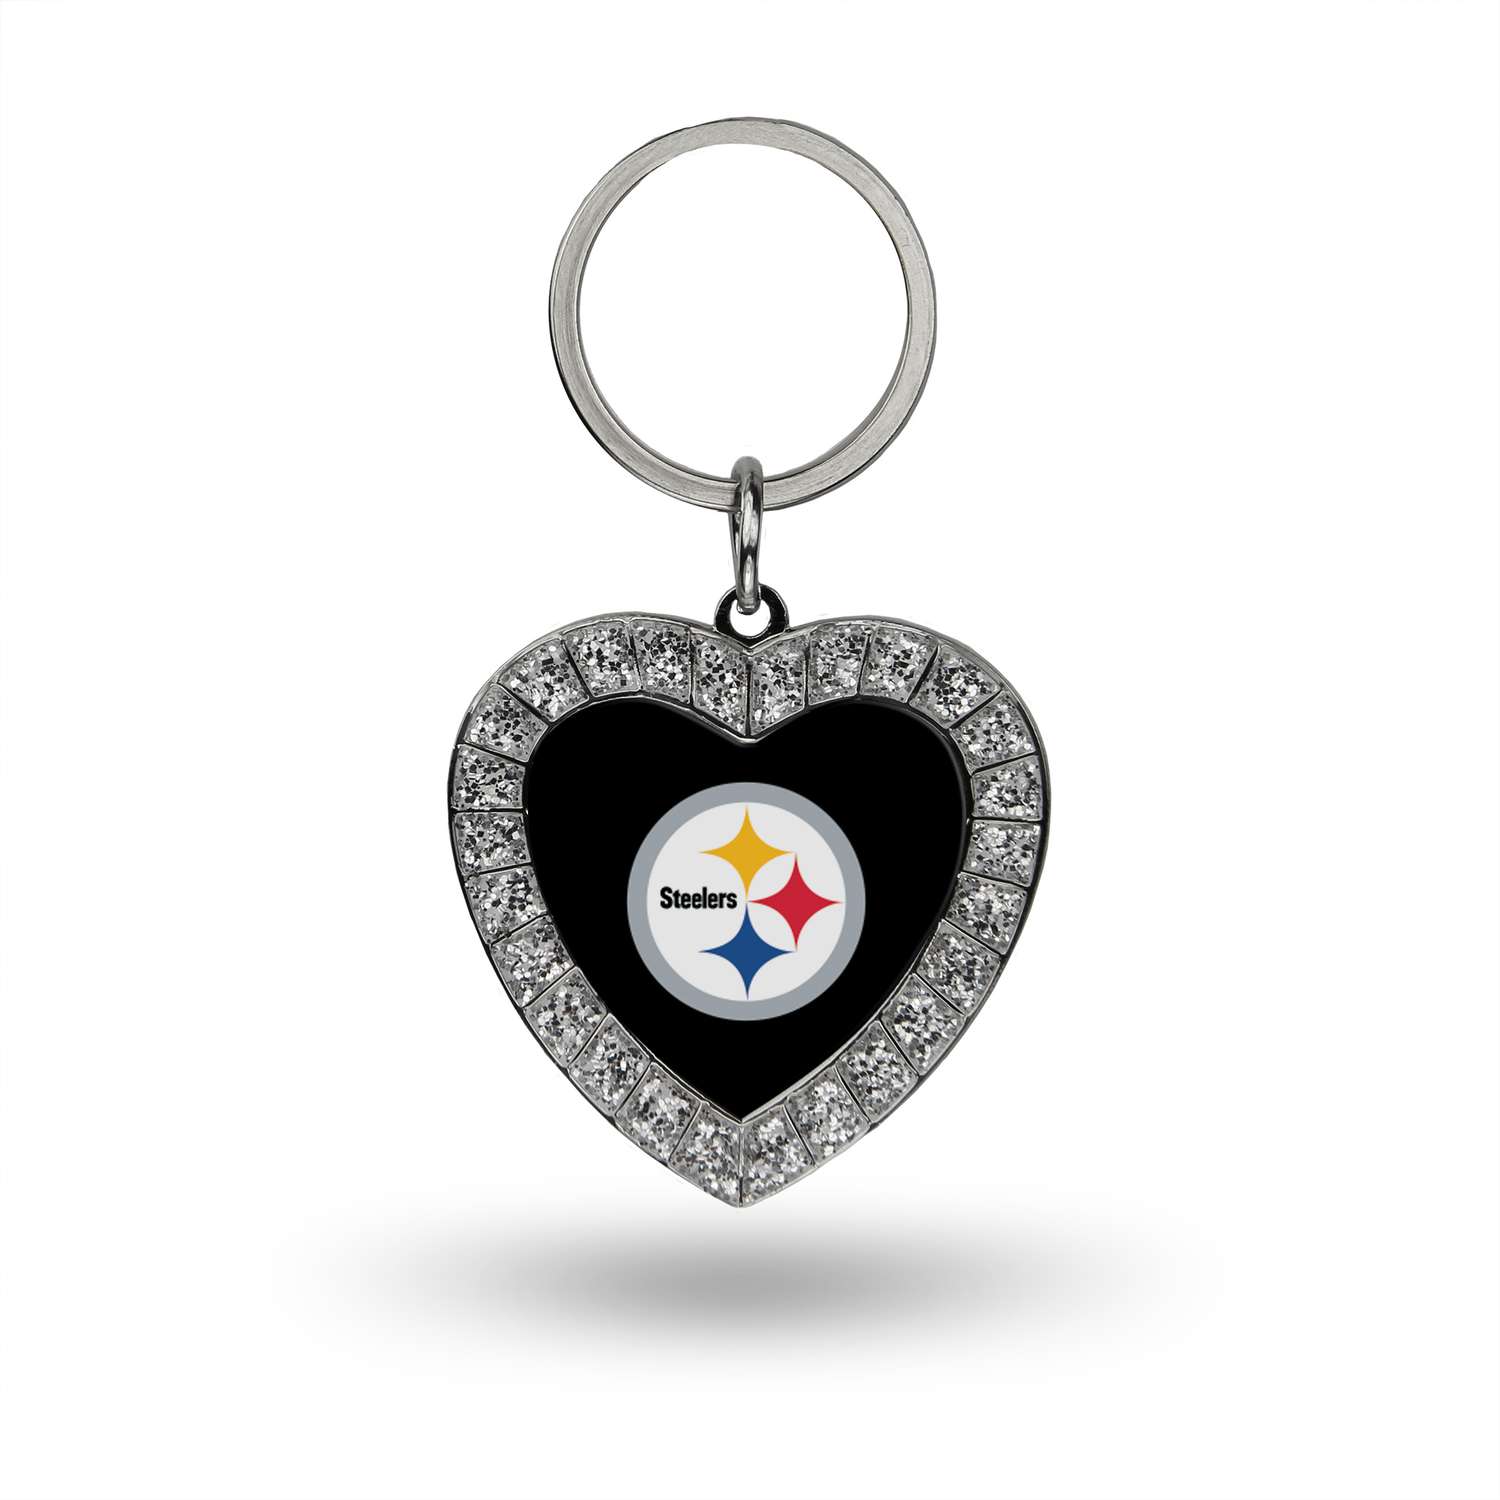 DIY Diamond Painting Keychains Kit Pittsburgh Steelers Nfl Football Club  Emblem